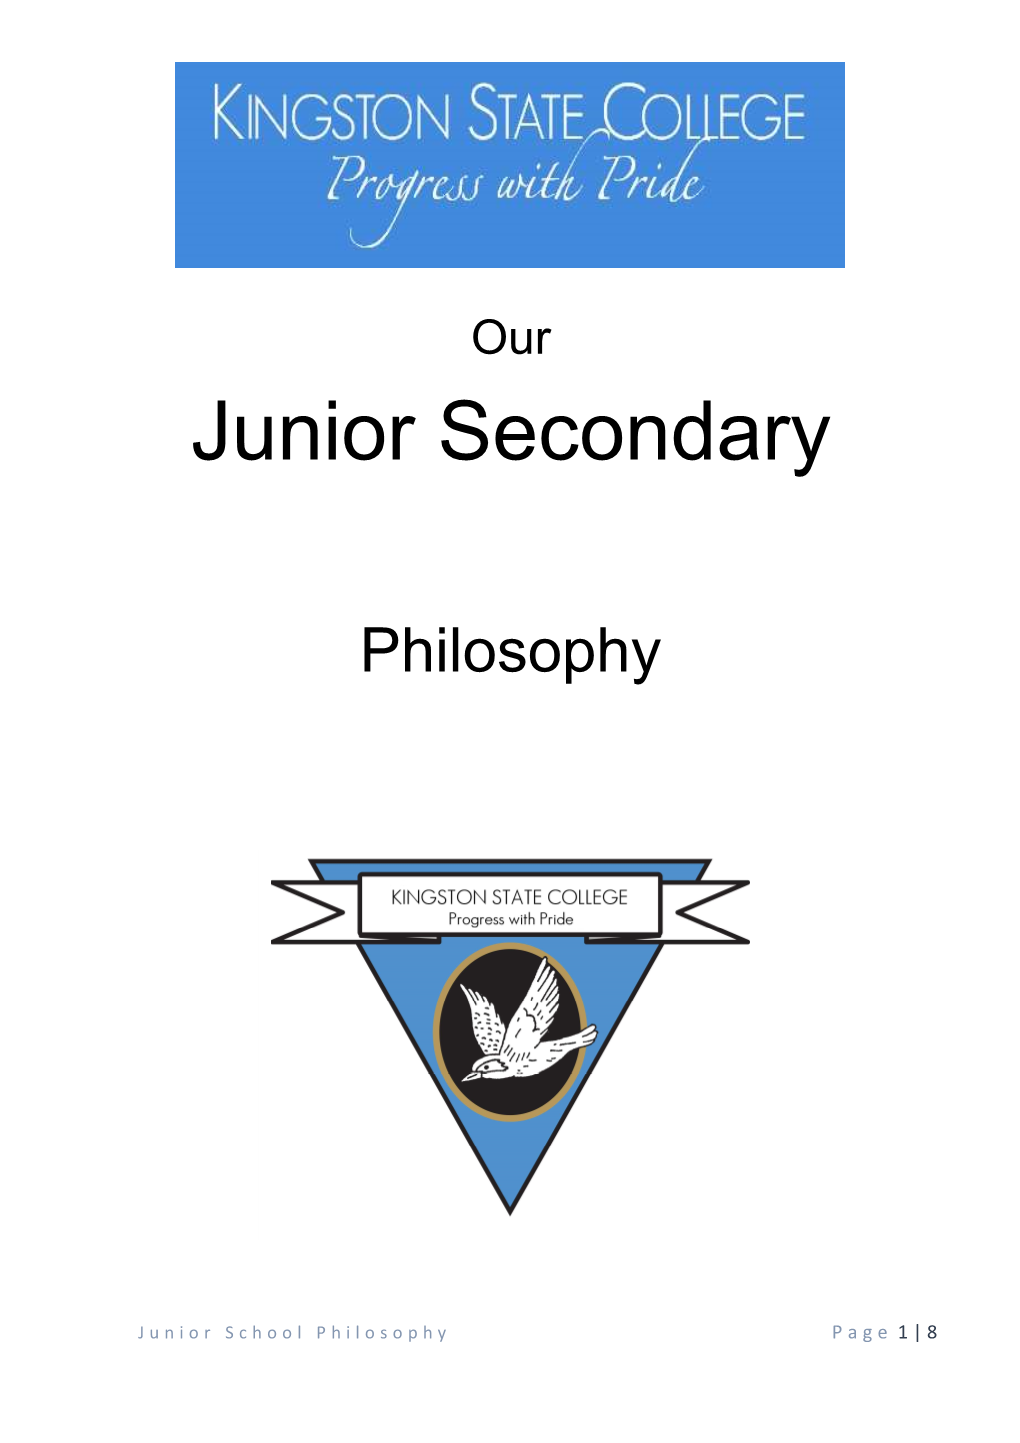 Junior Secondary Philosophy